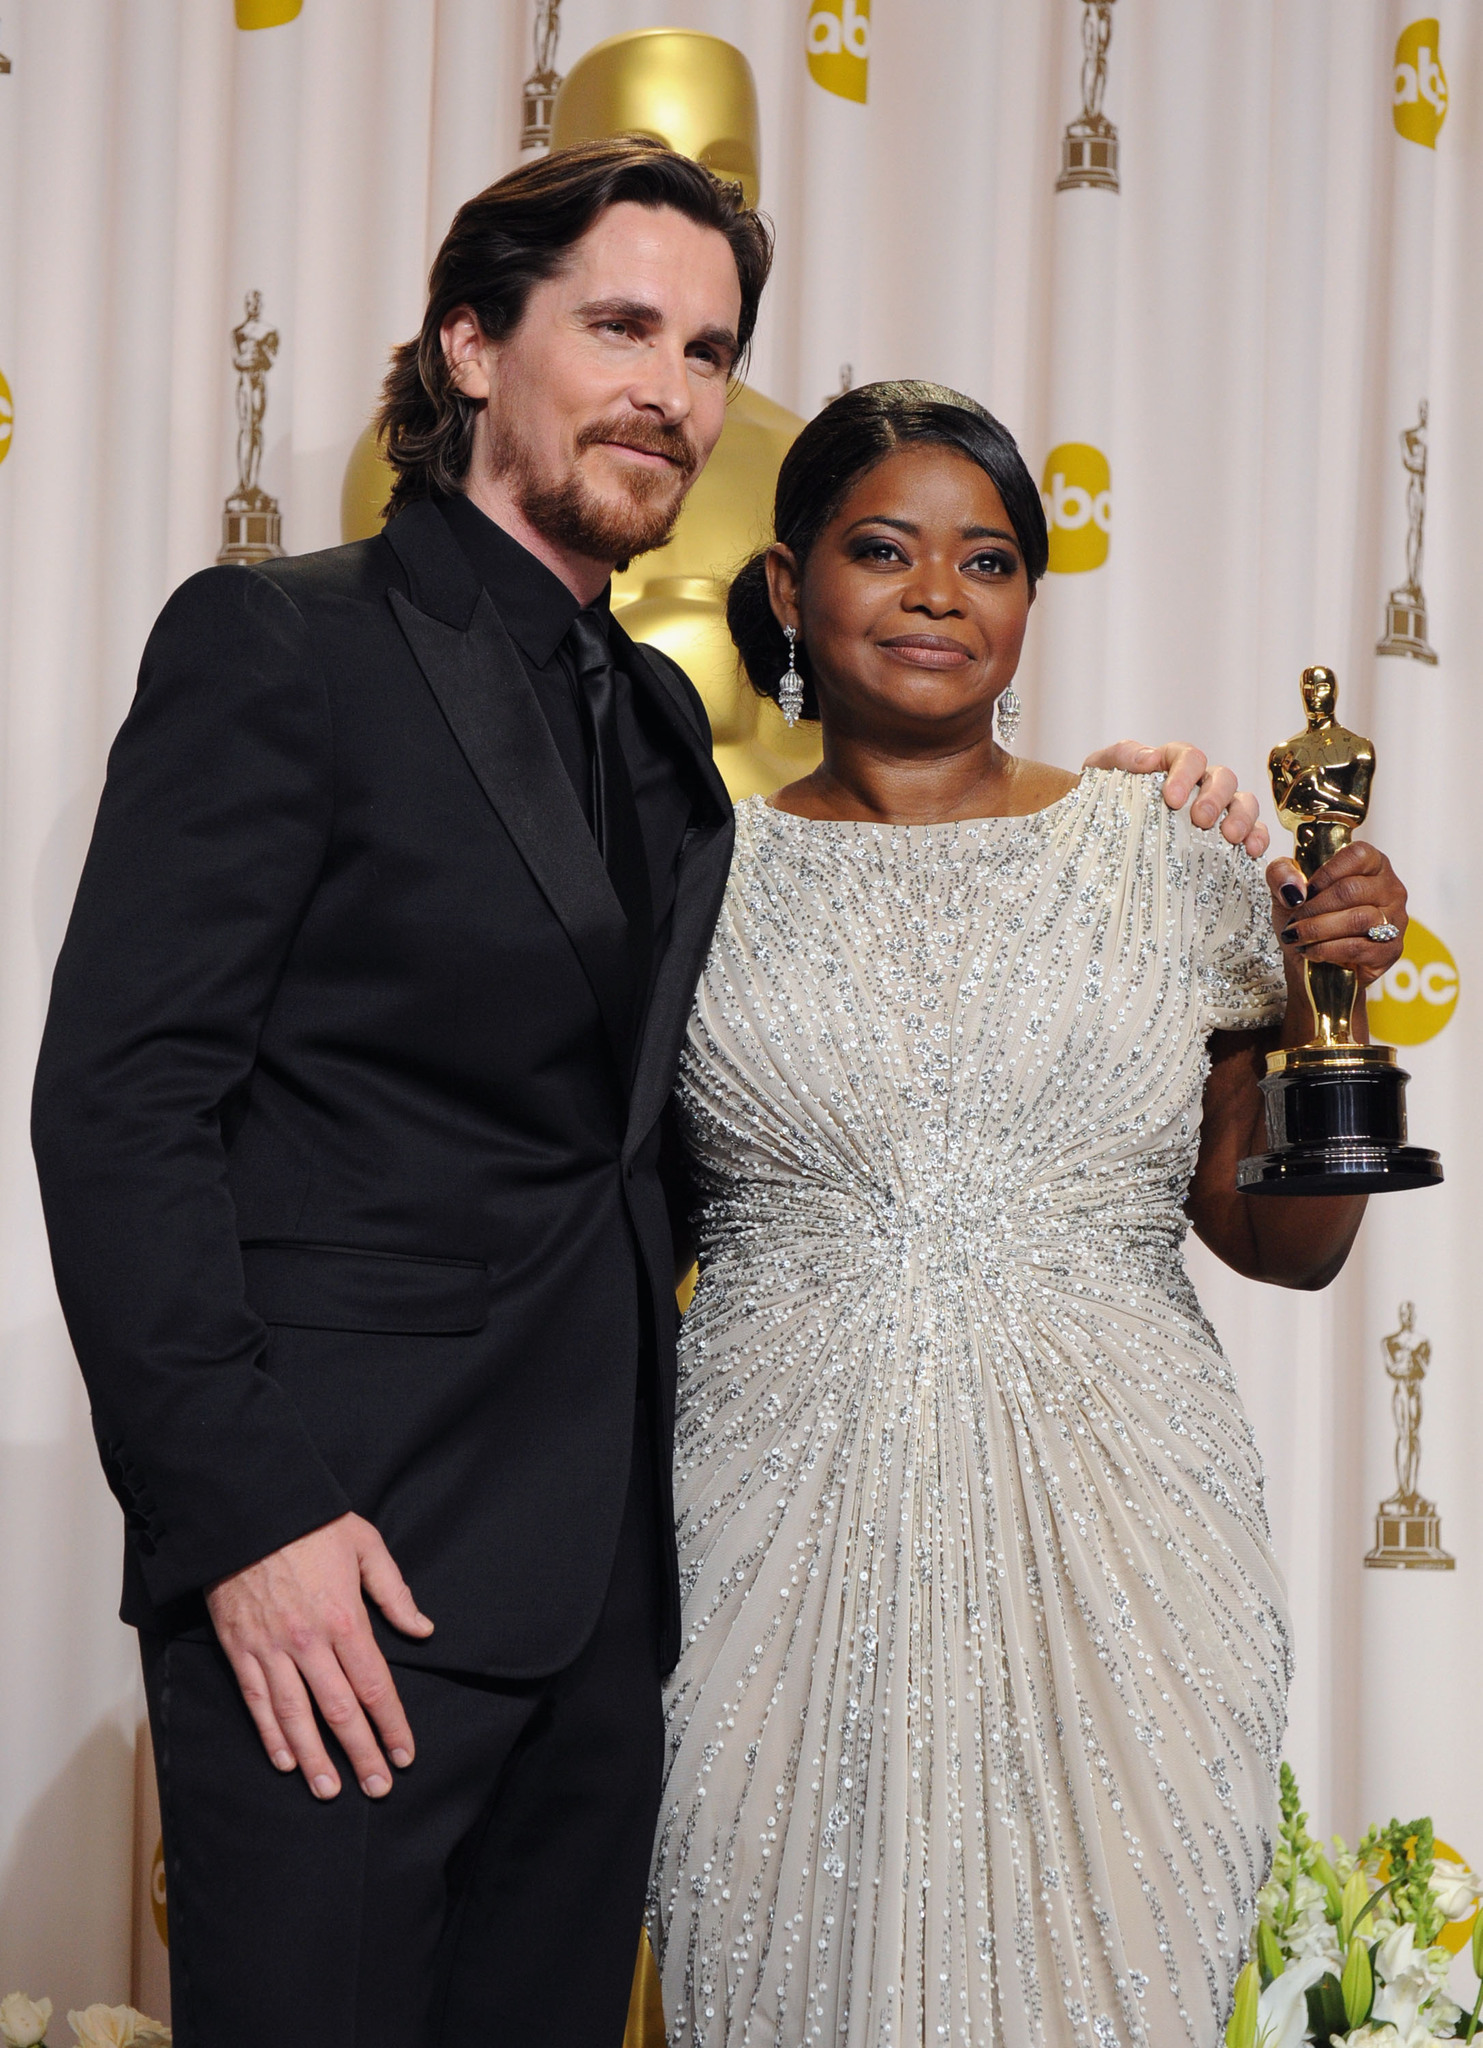 Christian Bale and Octavia Spencer